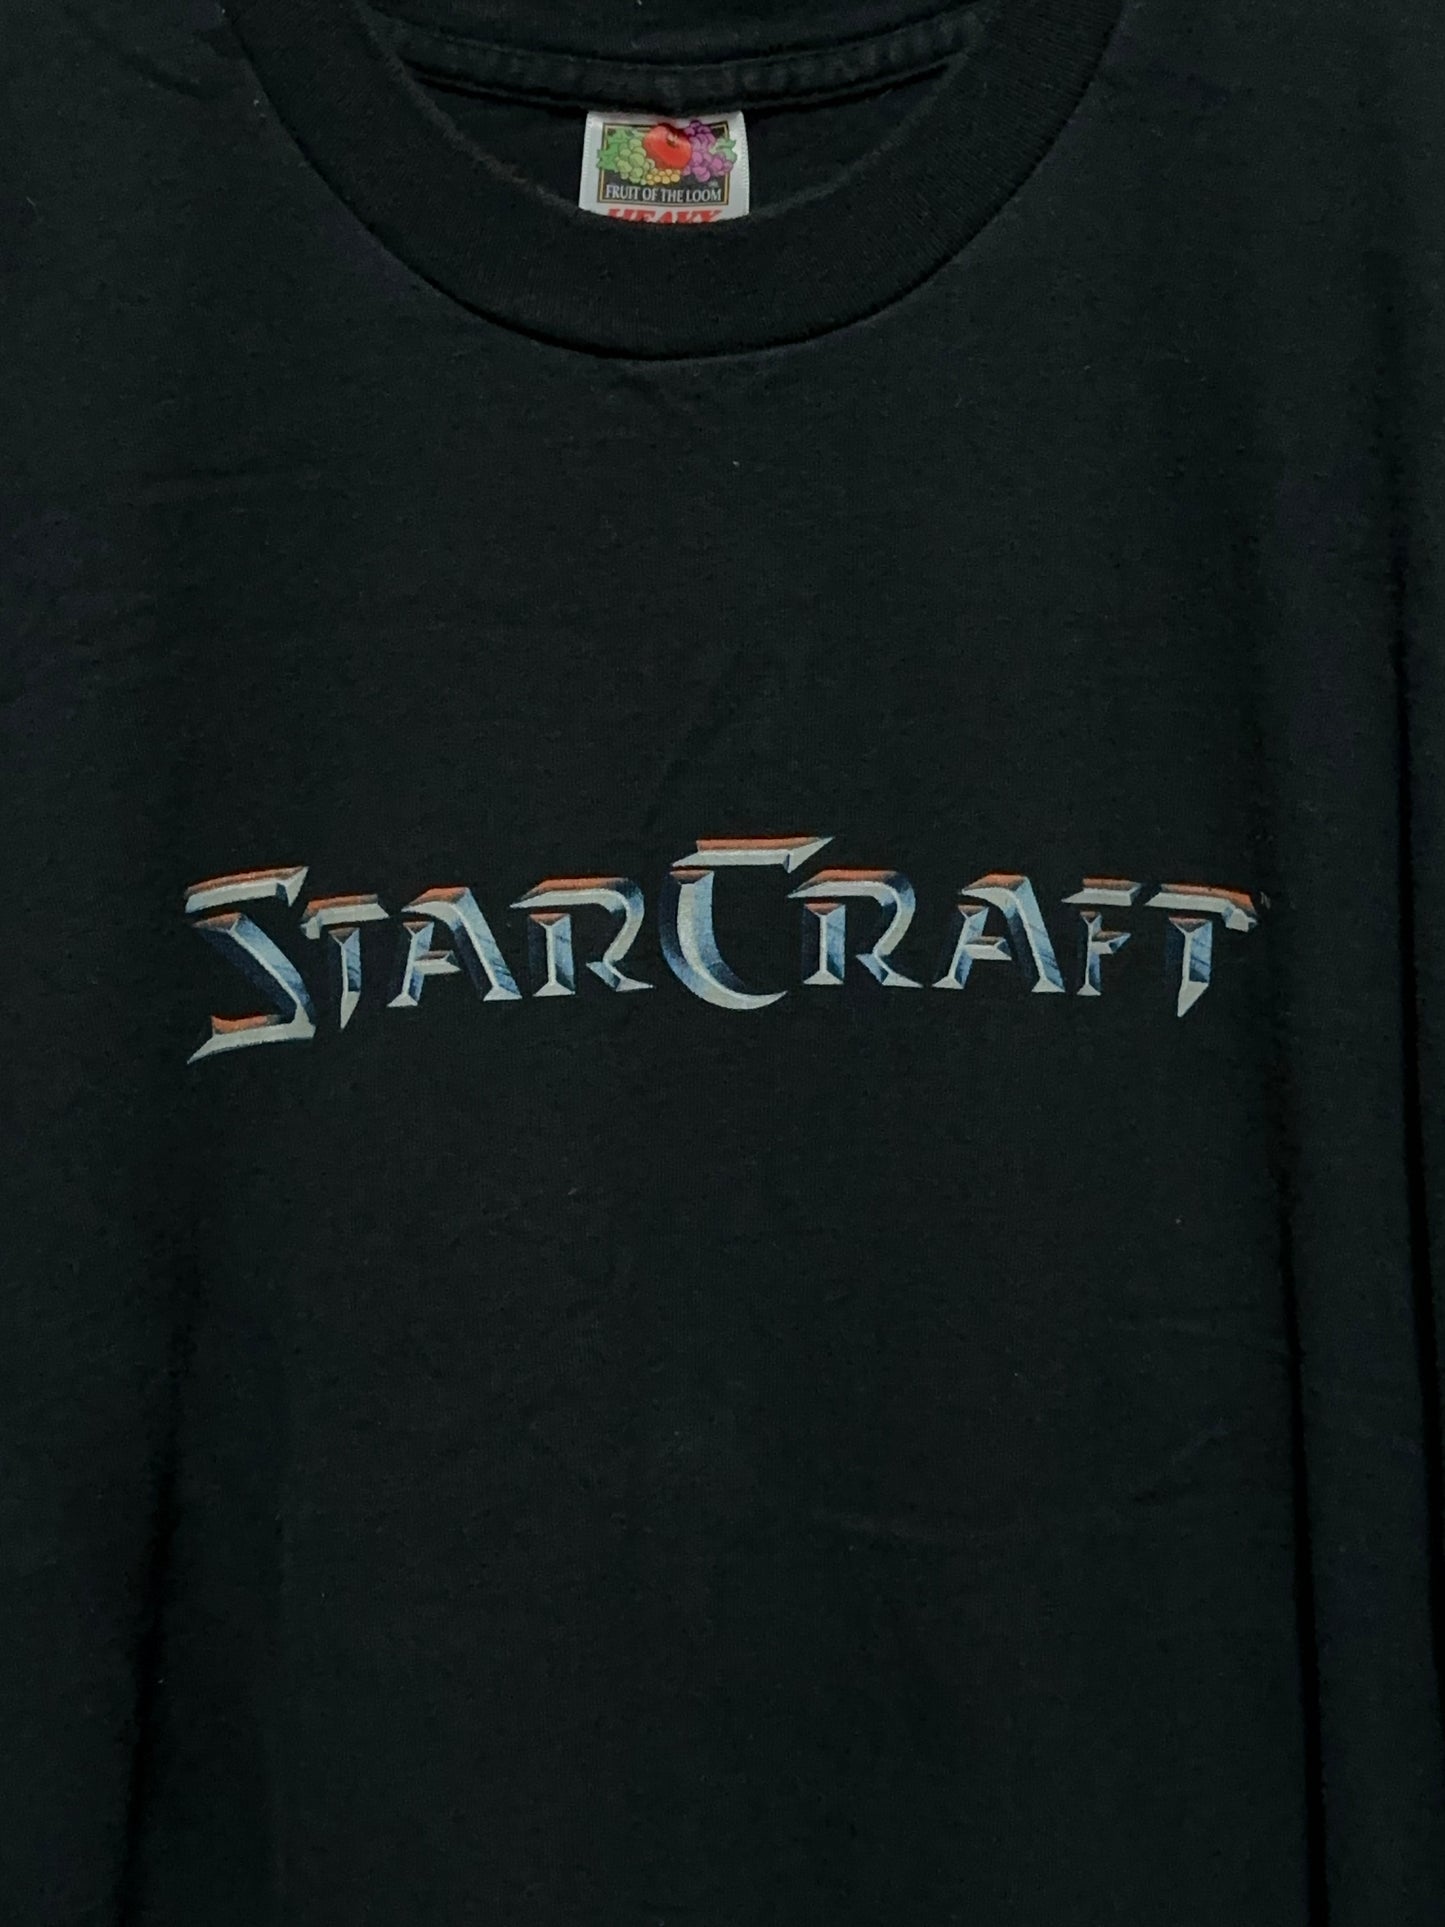 Vintage 90s Blizzard StarCraft Video Game Promo Graphic Tee XL